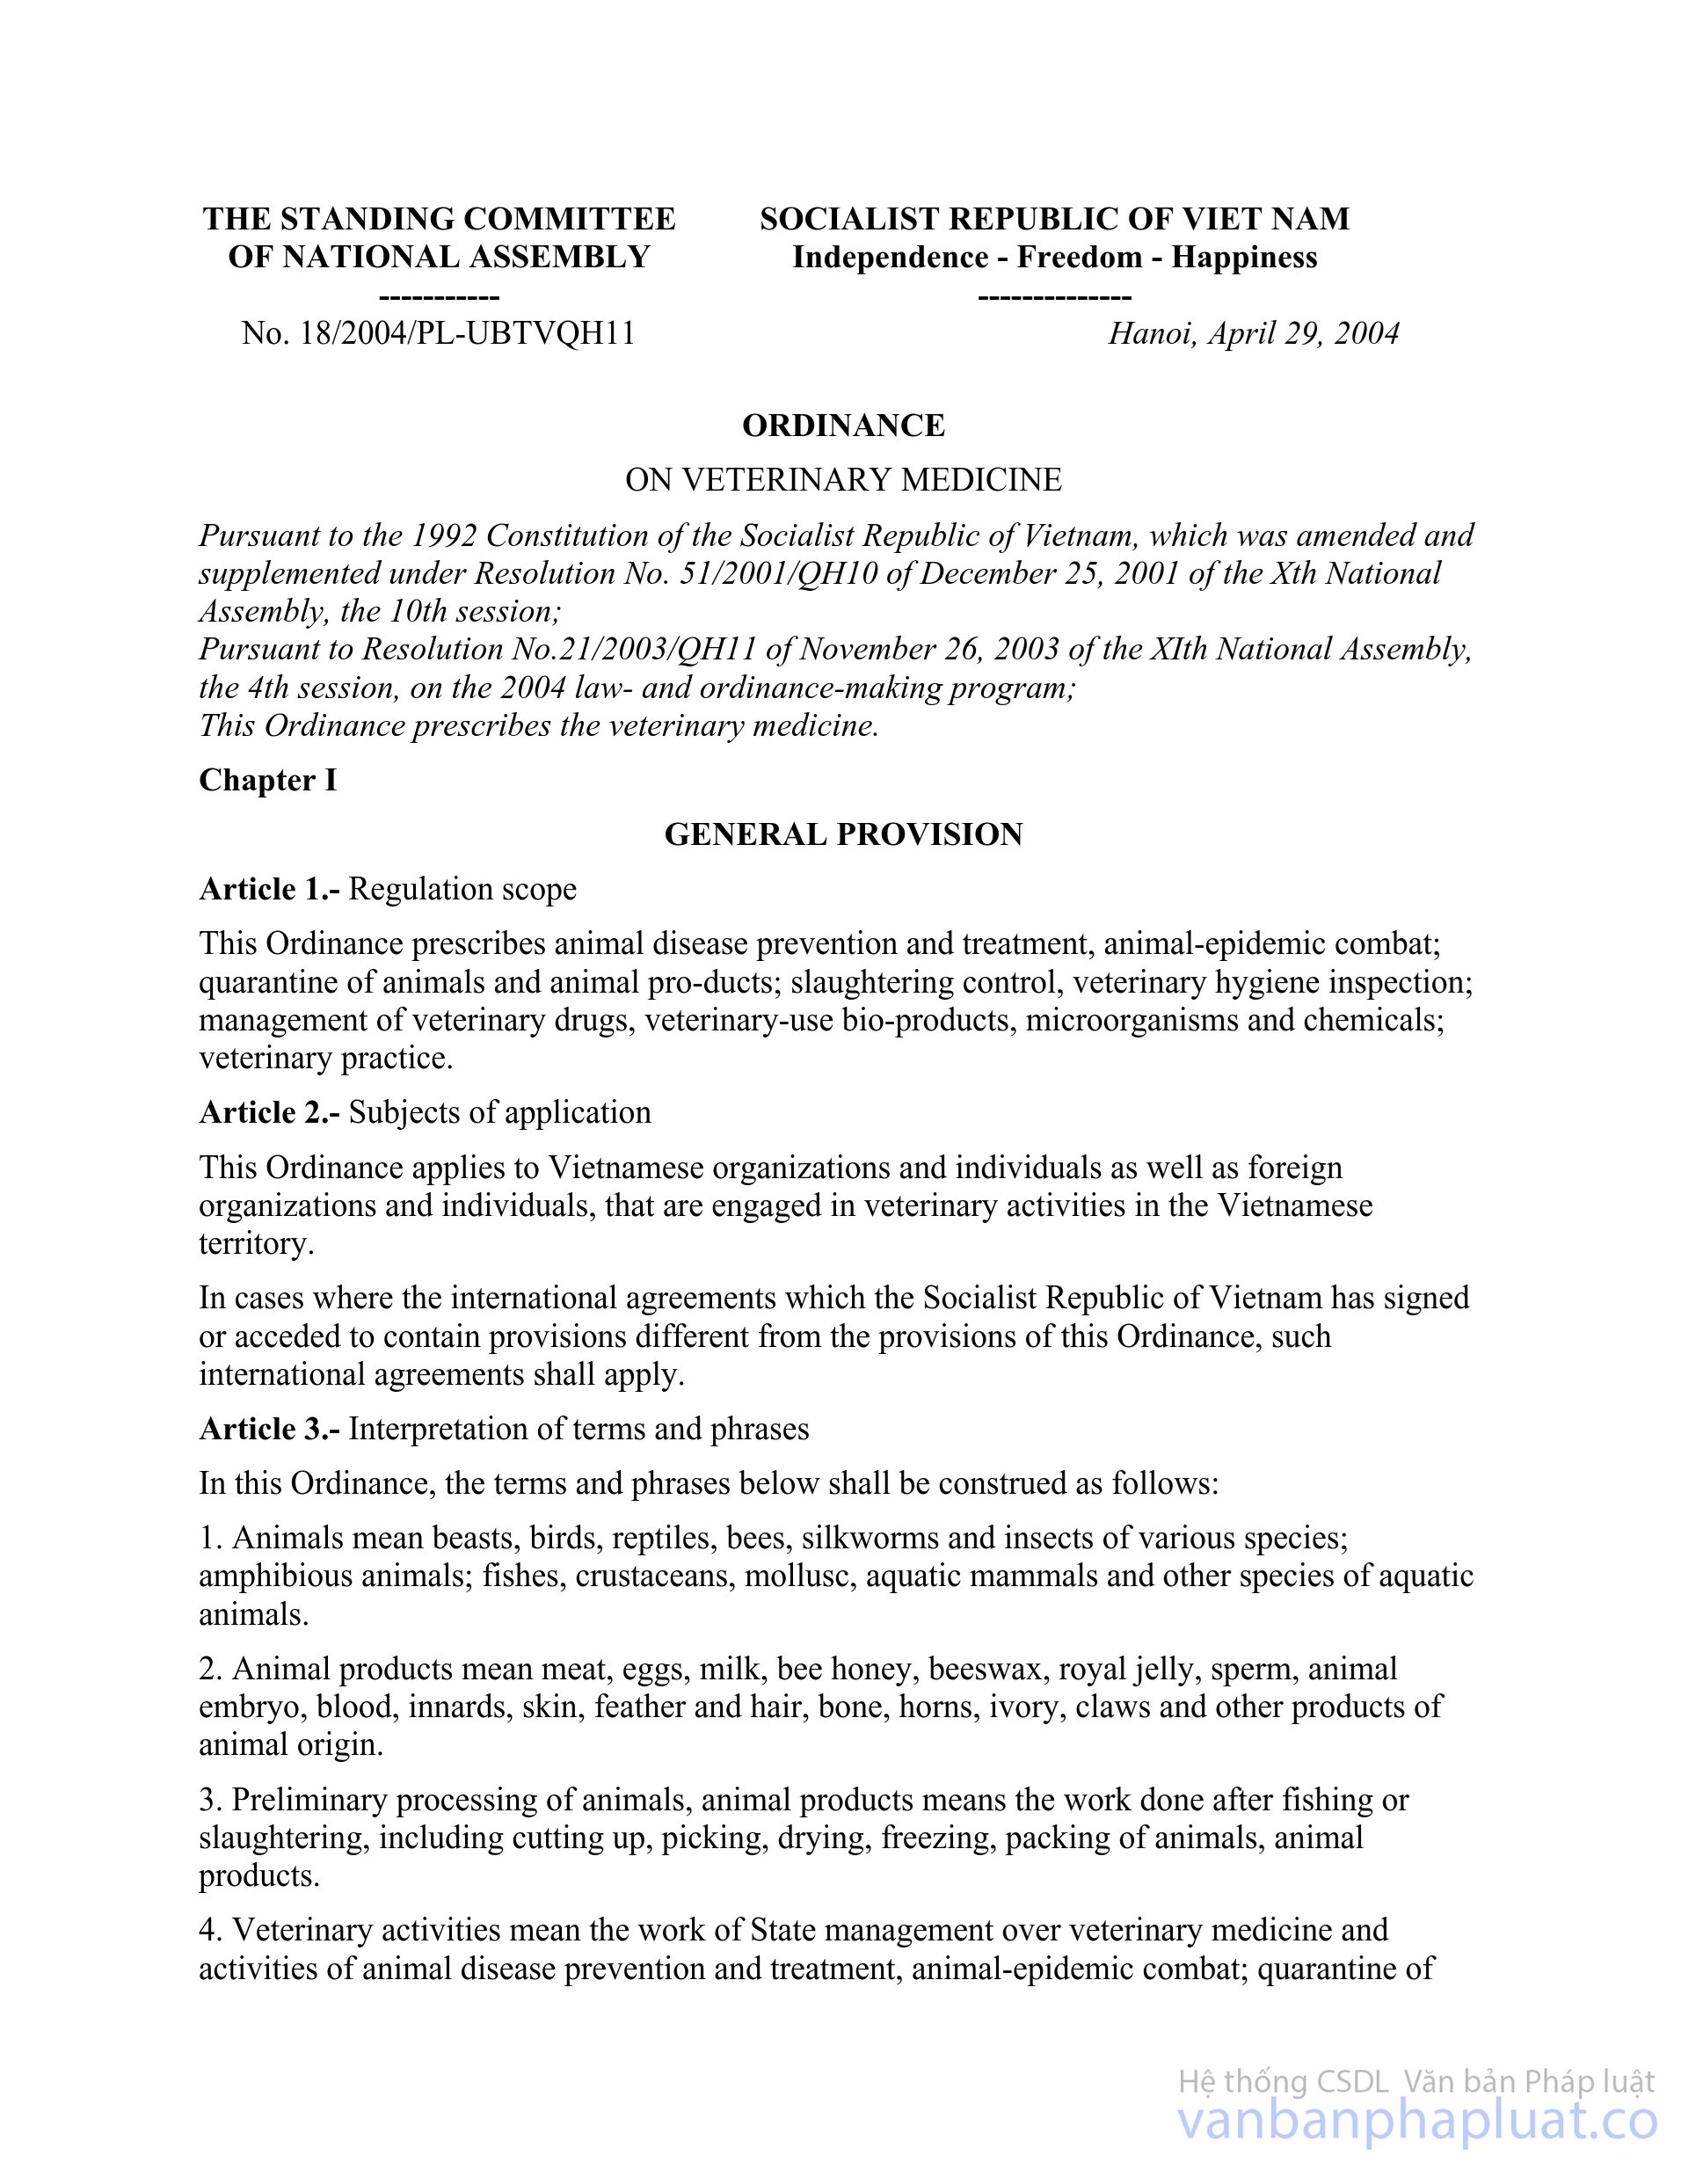 Ordinance No. 18/2004/PL-UBTVQH11 of April 29, 2004 on veterinary medicine